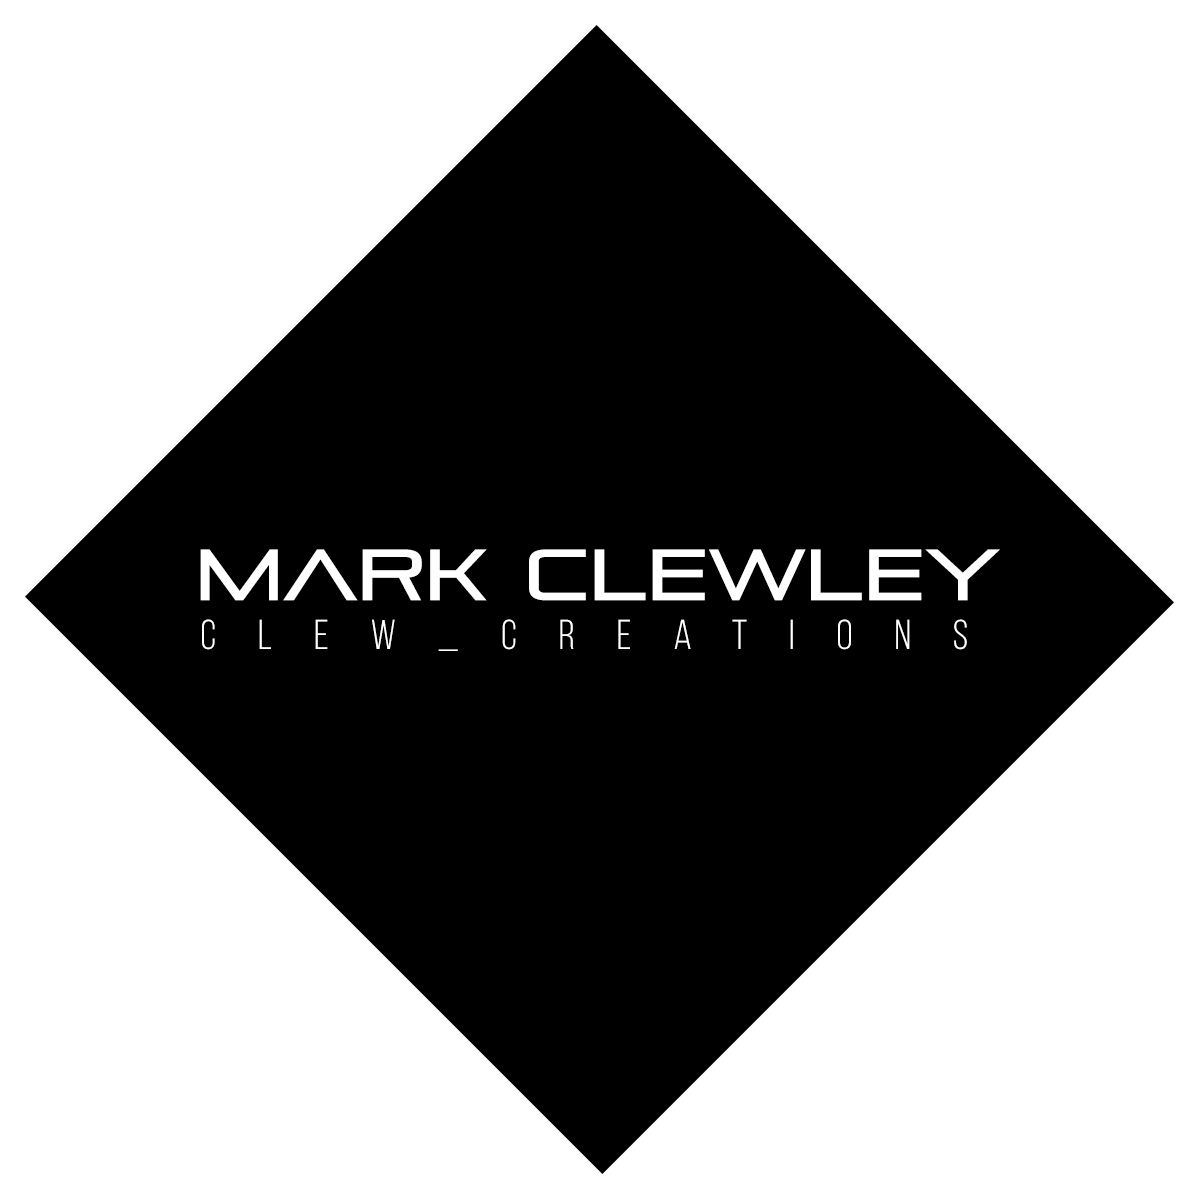 markclewley logo